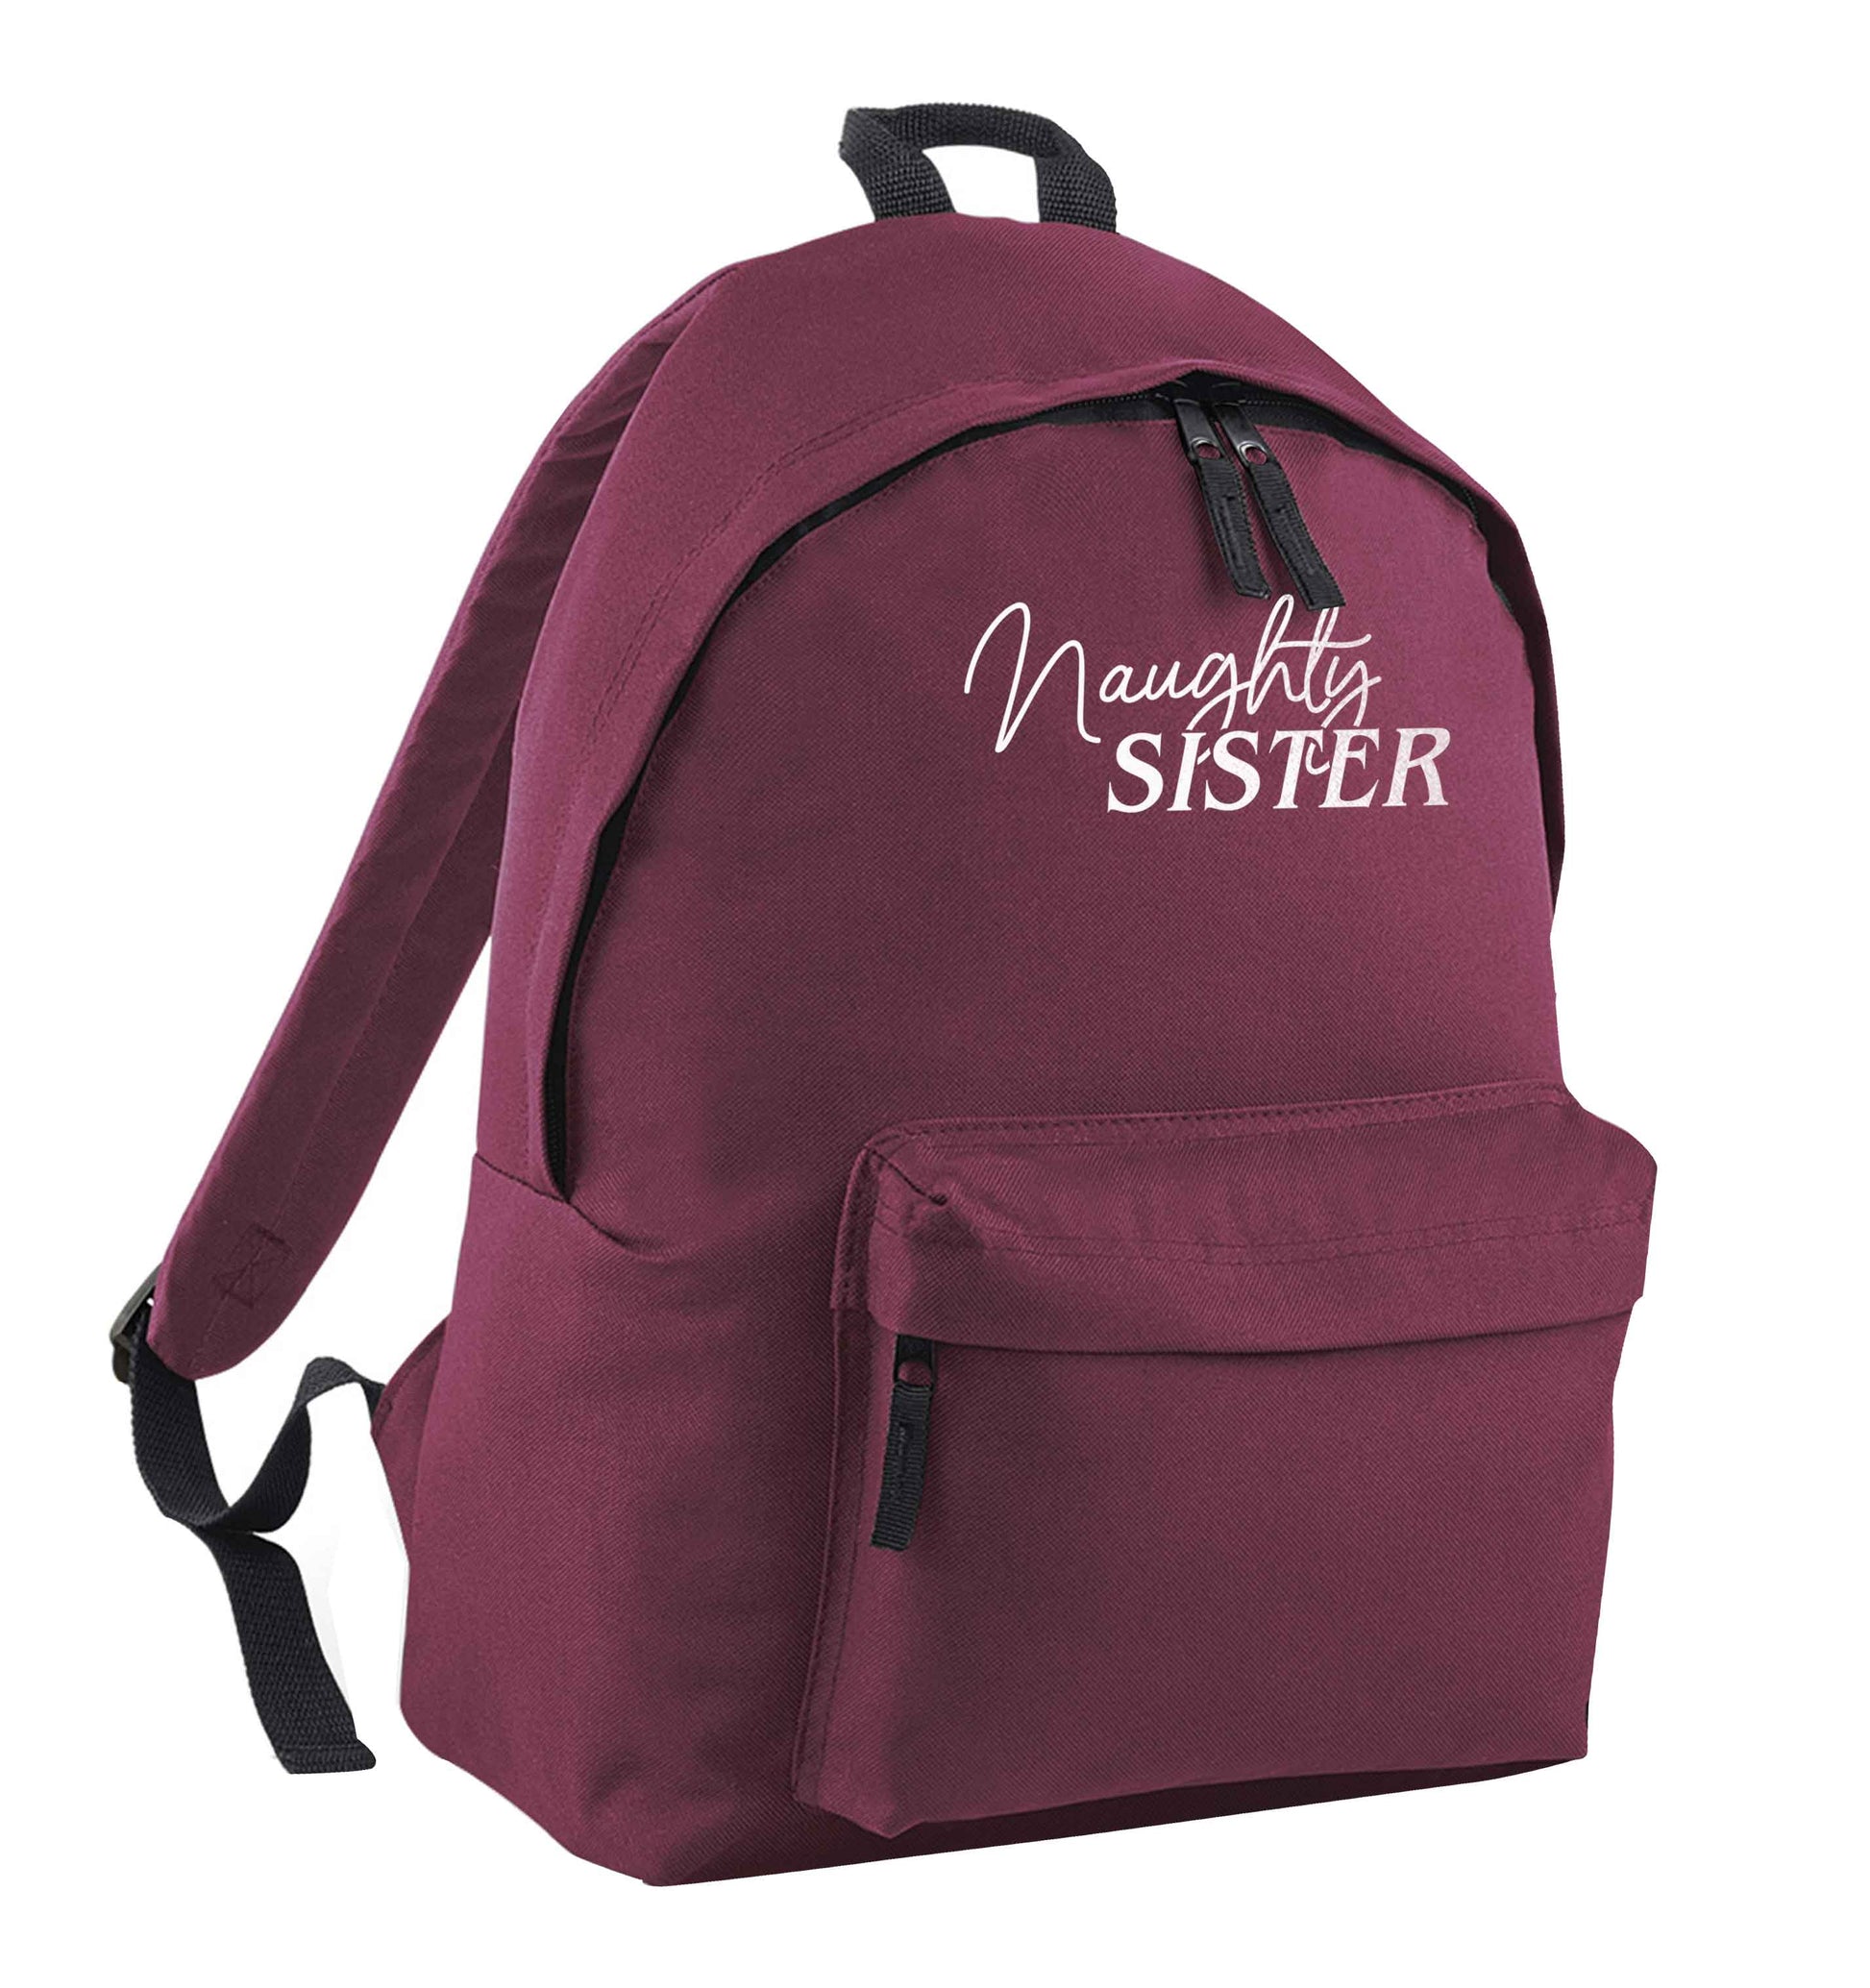 Naughty Sister maroon adults backpack